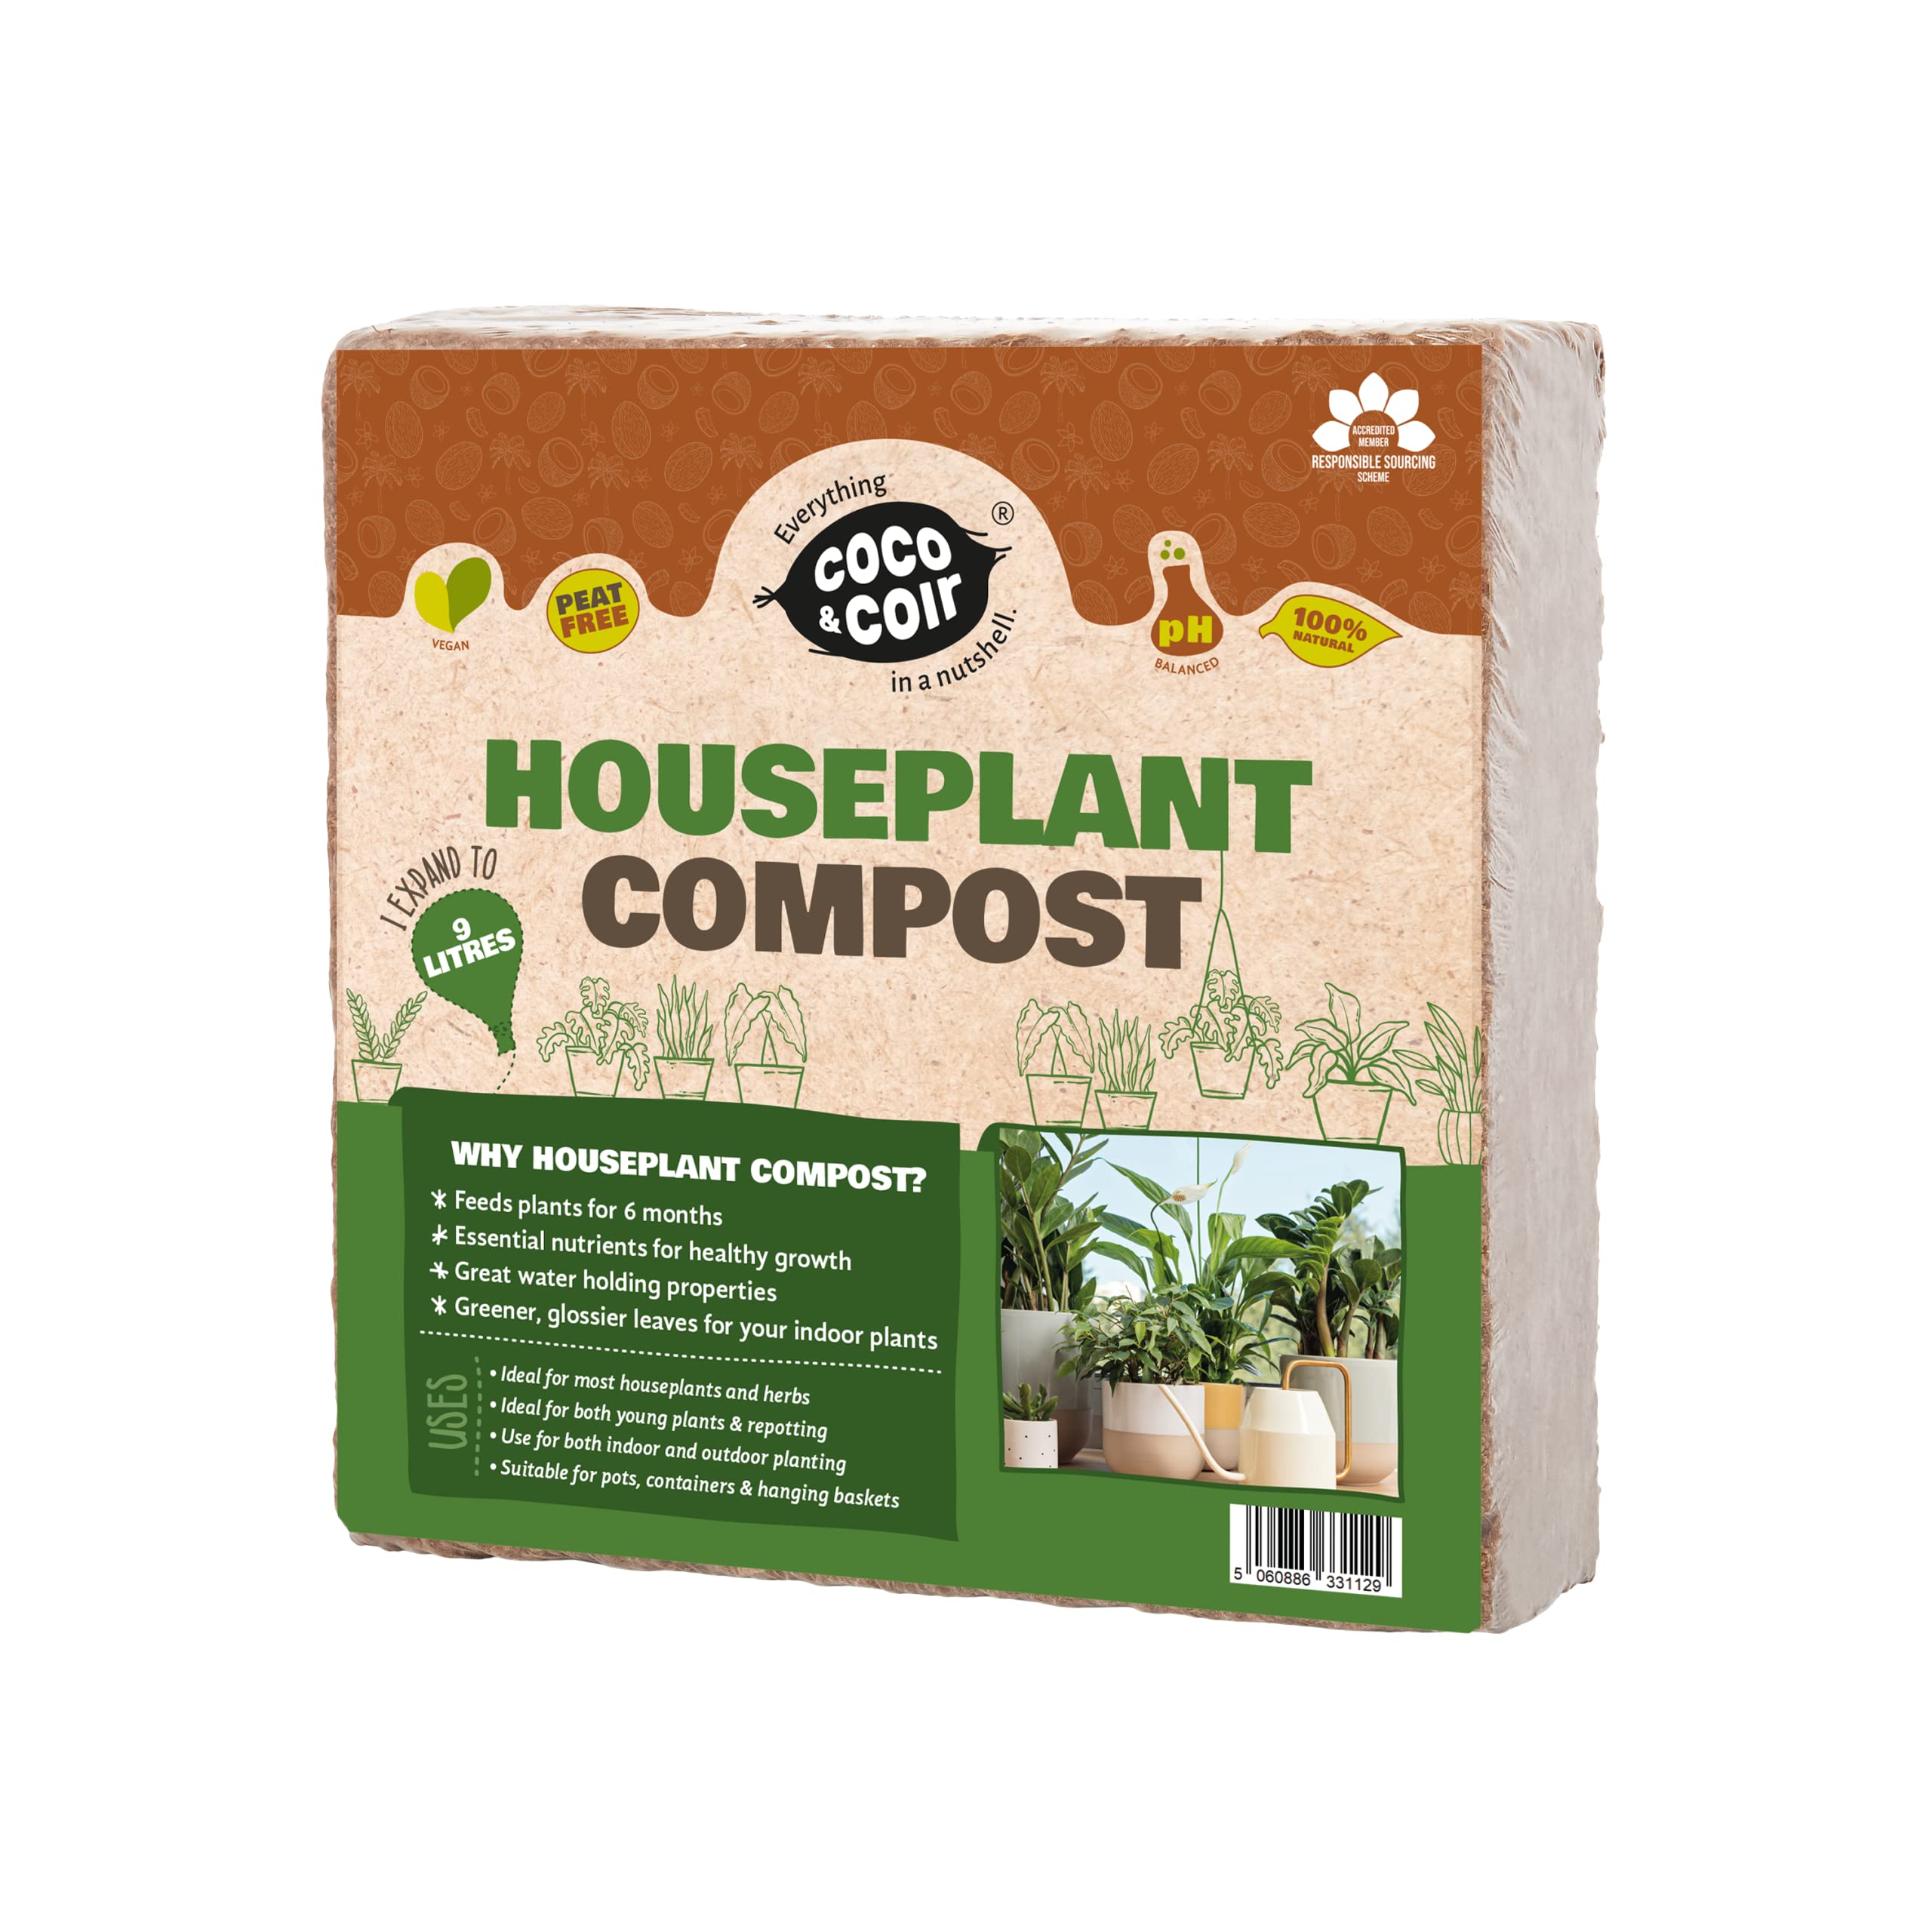 Houseplant Compost